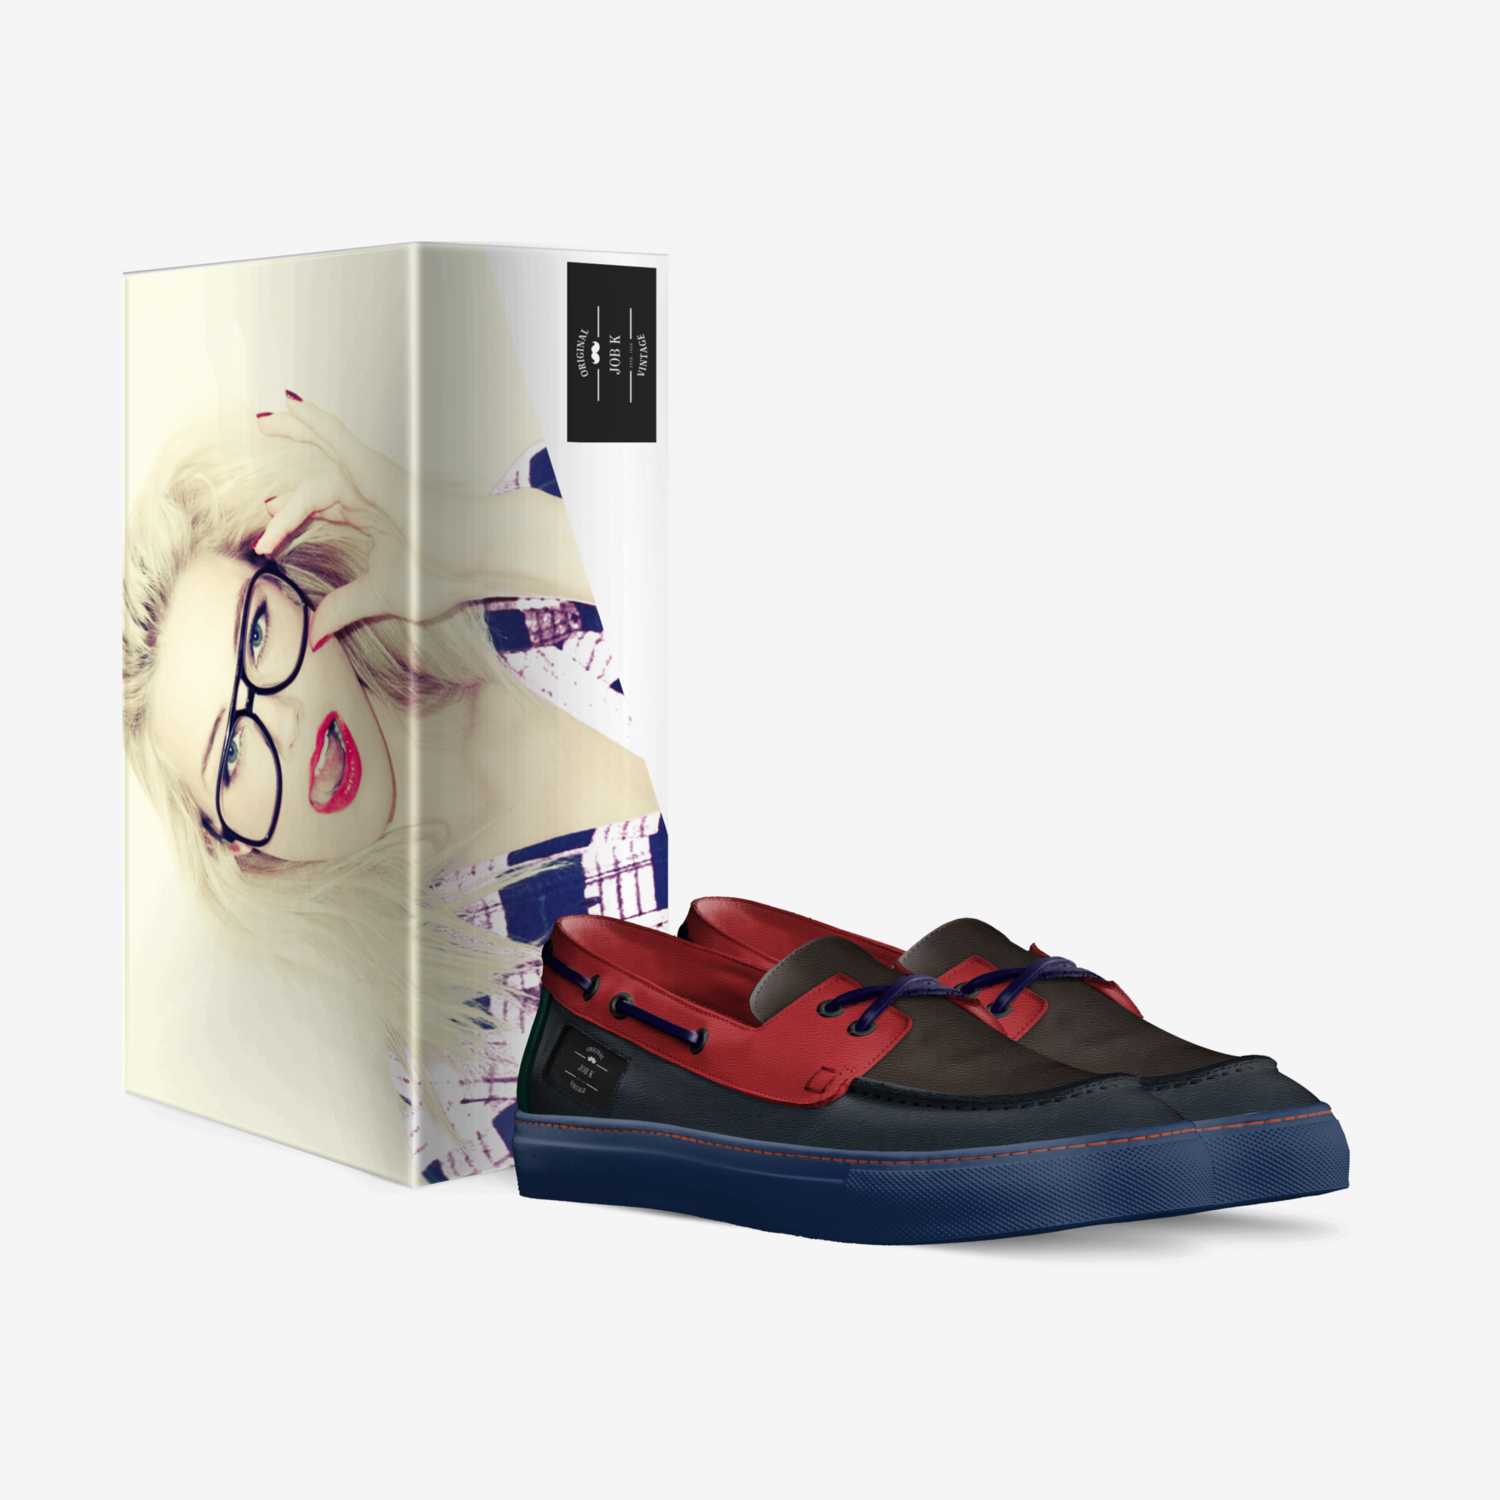 JoB K custom made in Italy shoes by Job Kele Kele | Box view